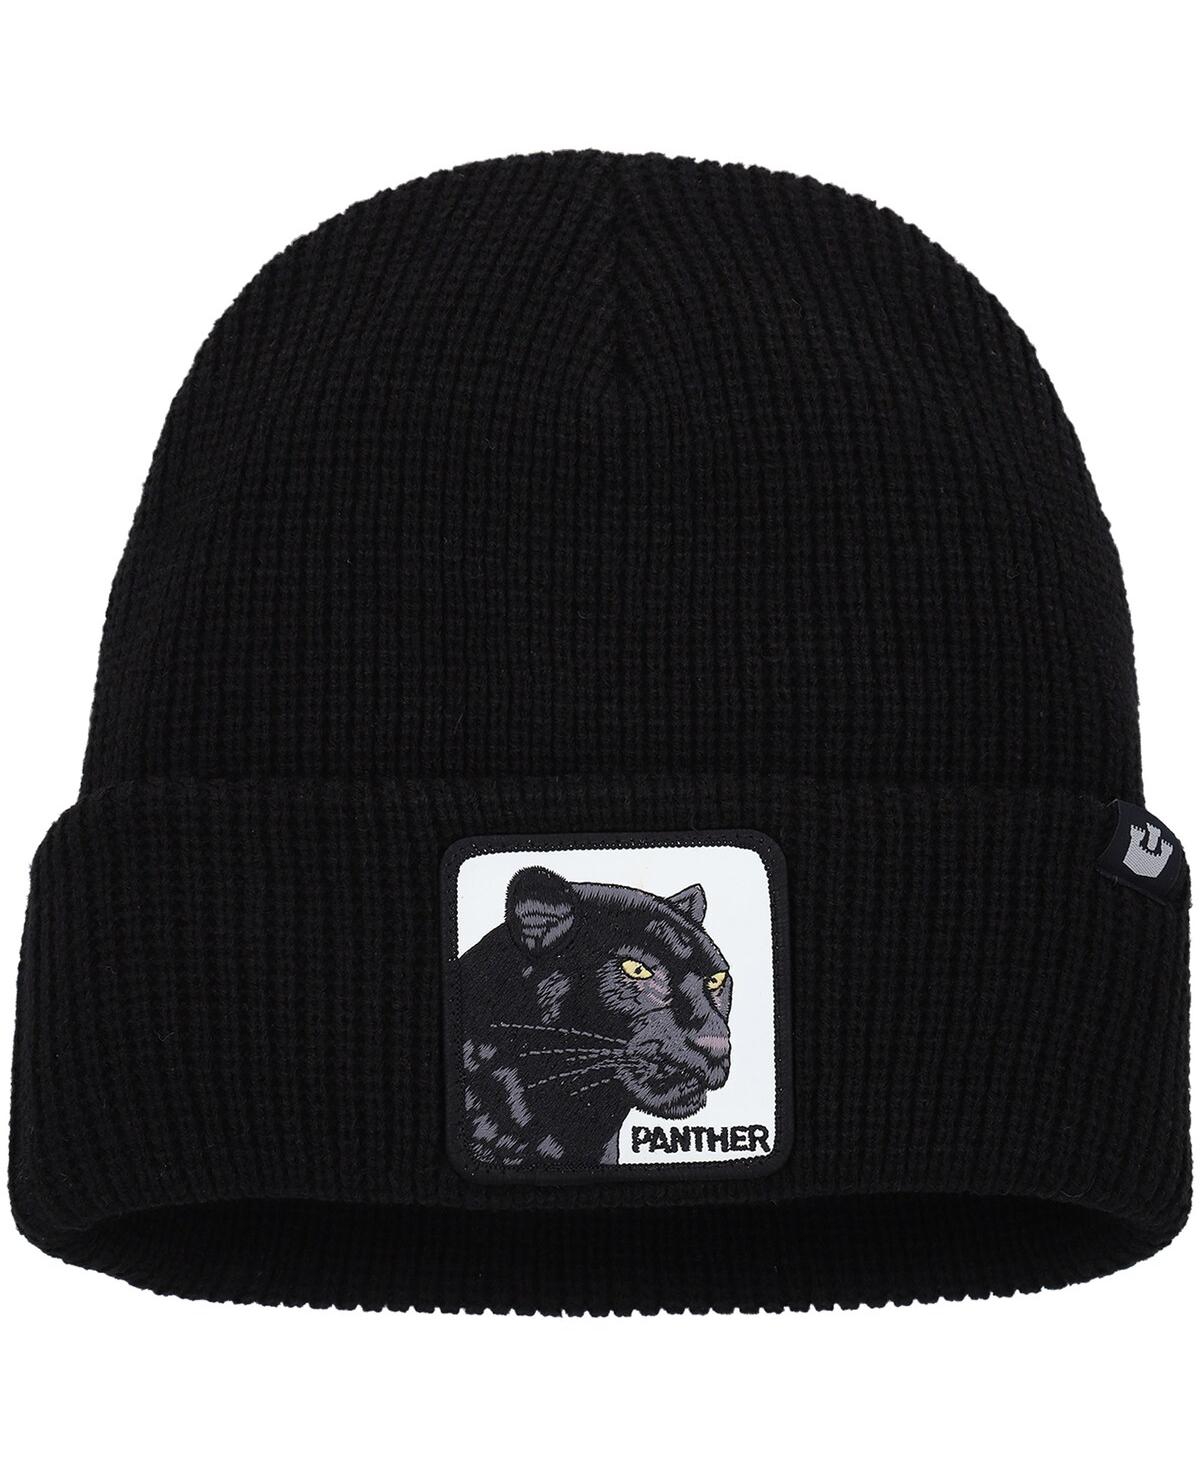 Goorin Bros Men's . Black Panther Cuffed Knit Hat